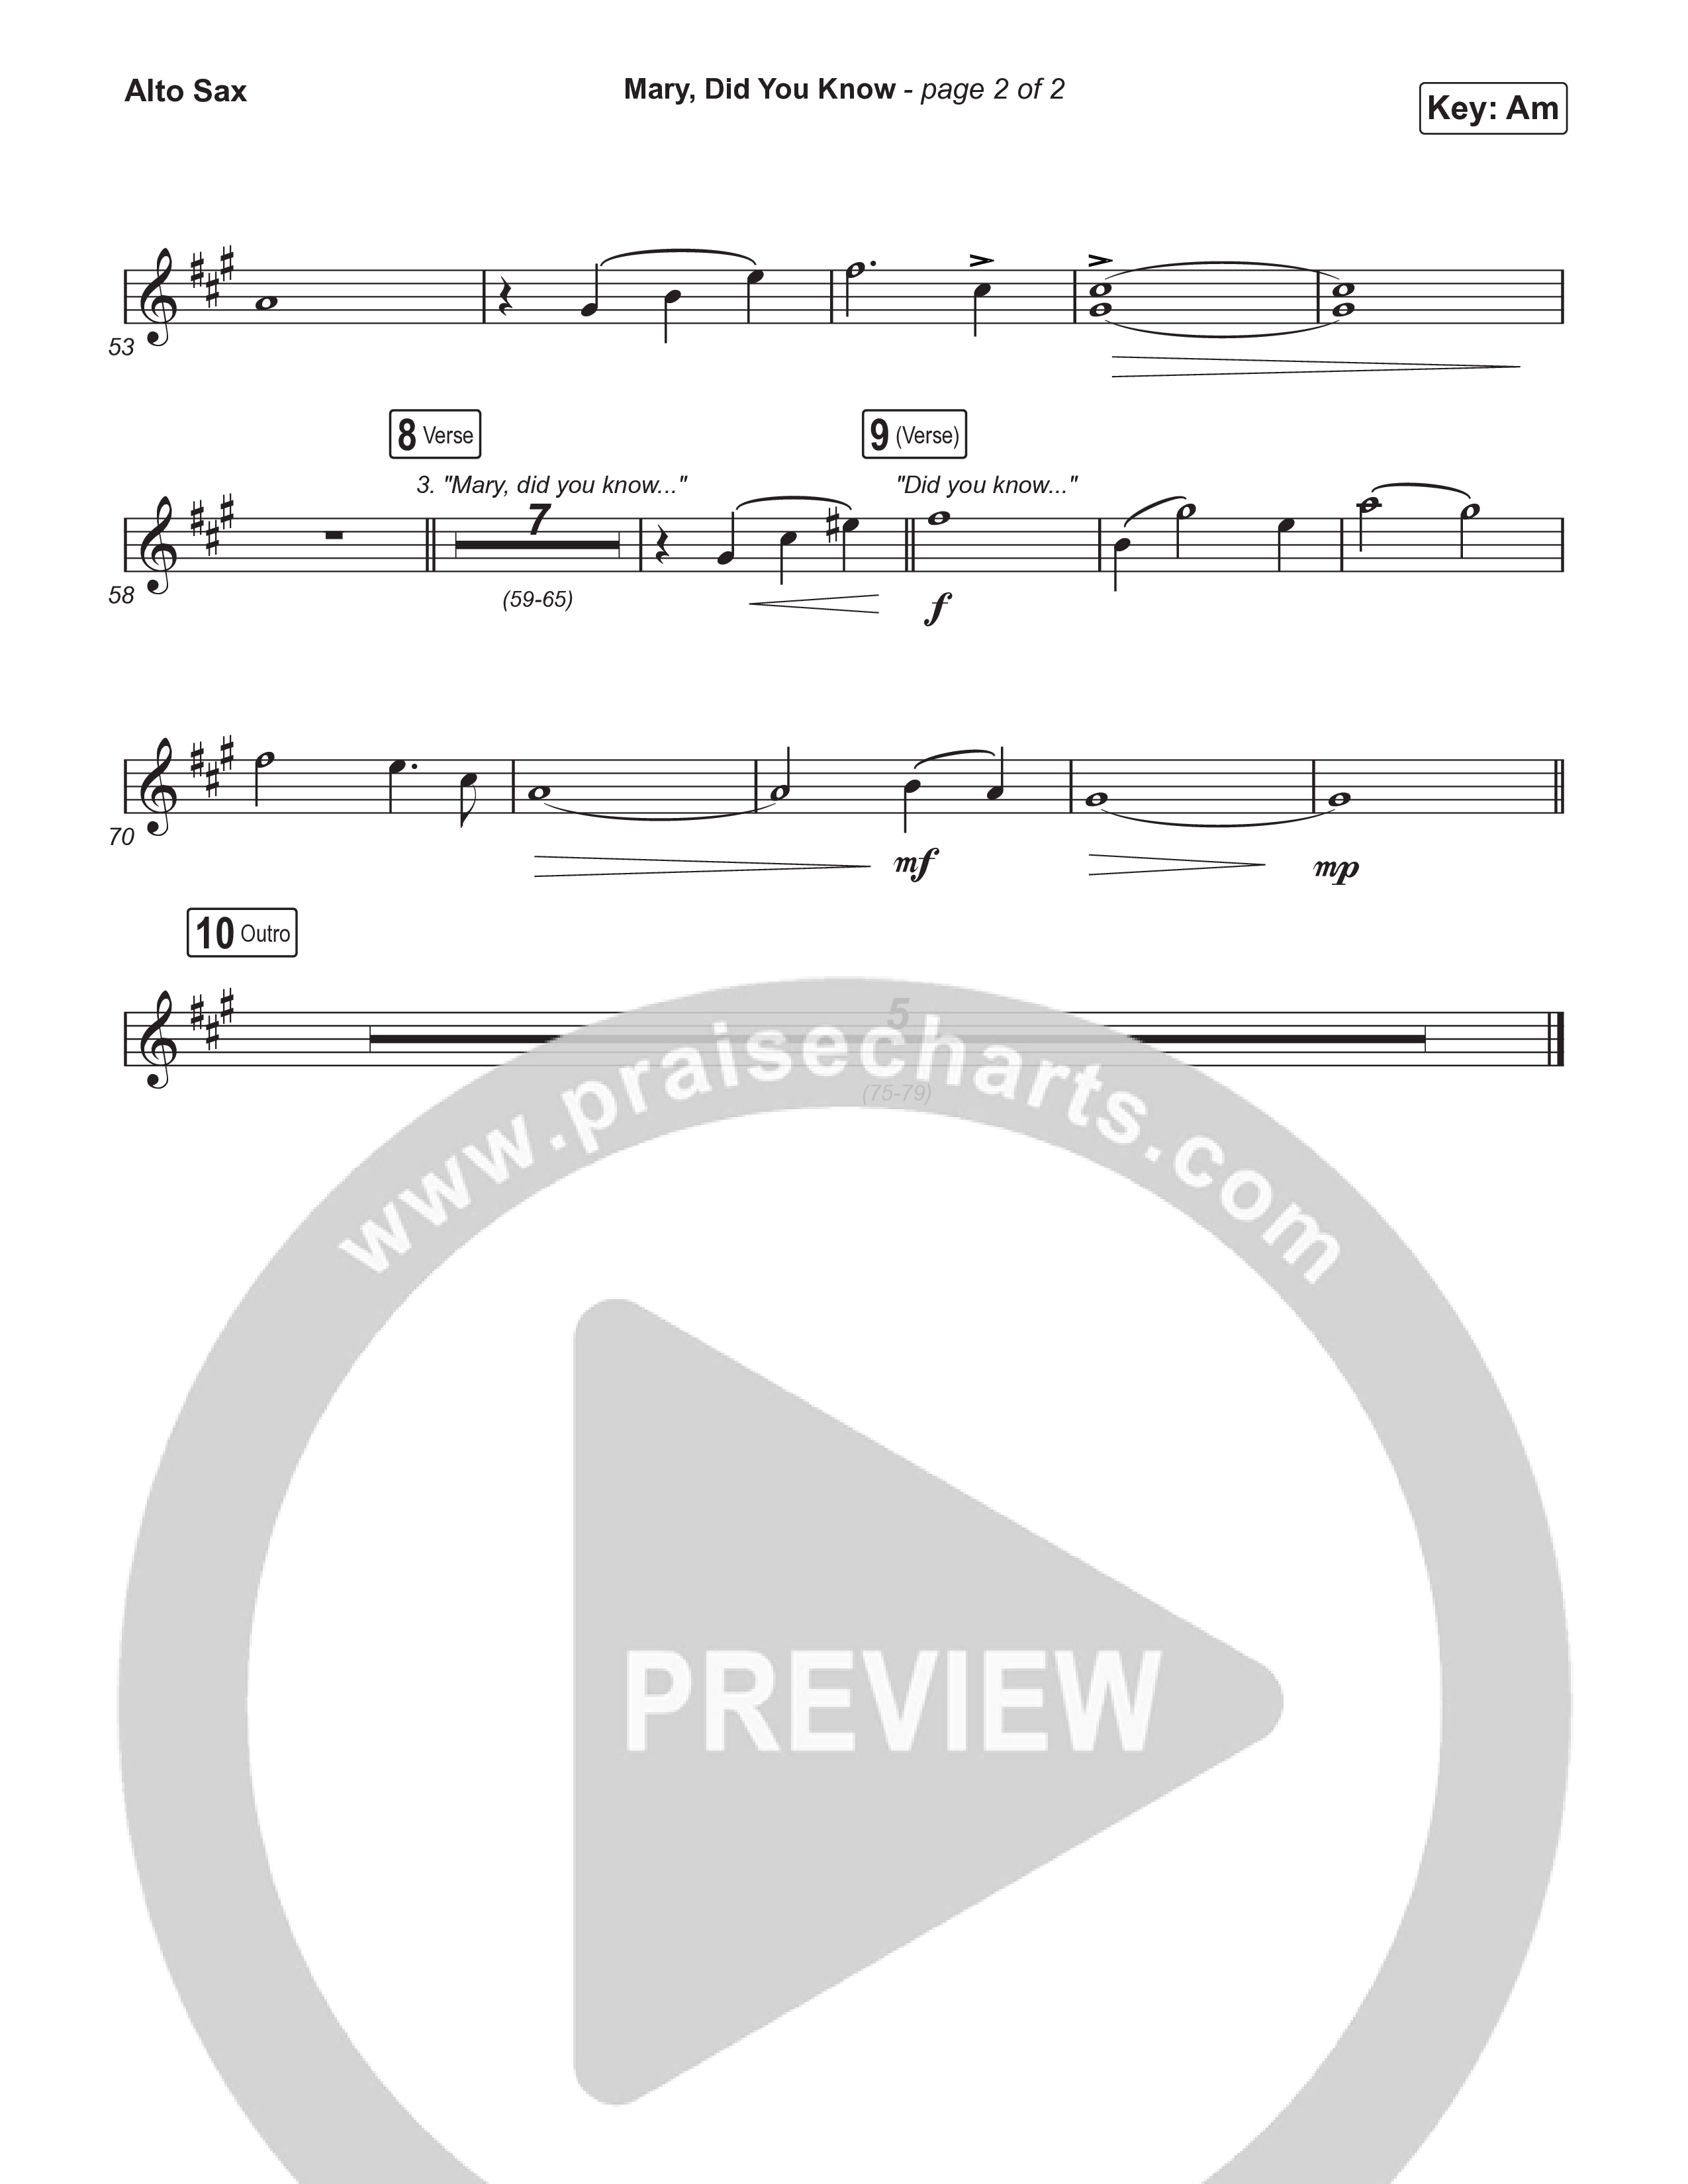 Mary Did You Know (Worship Choir SAB) Sax Pack (Anne Wilson / Arr. Luke Gambill)